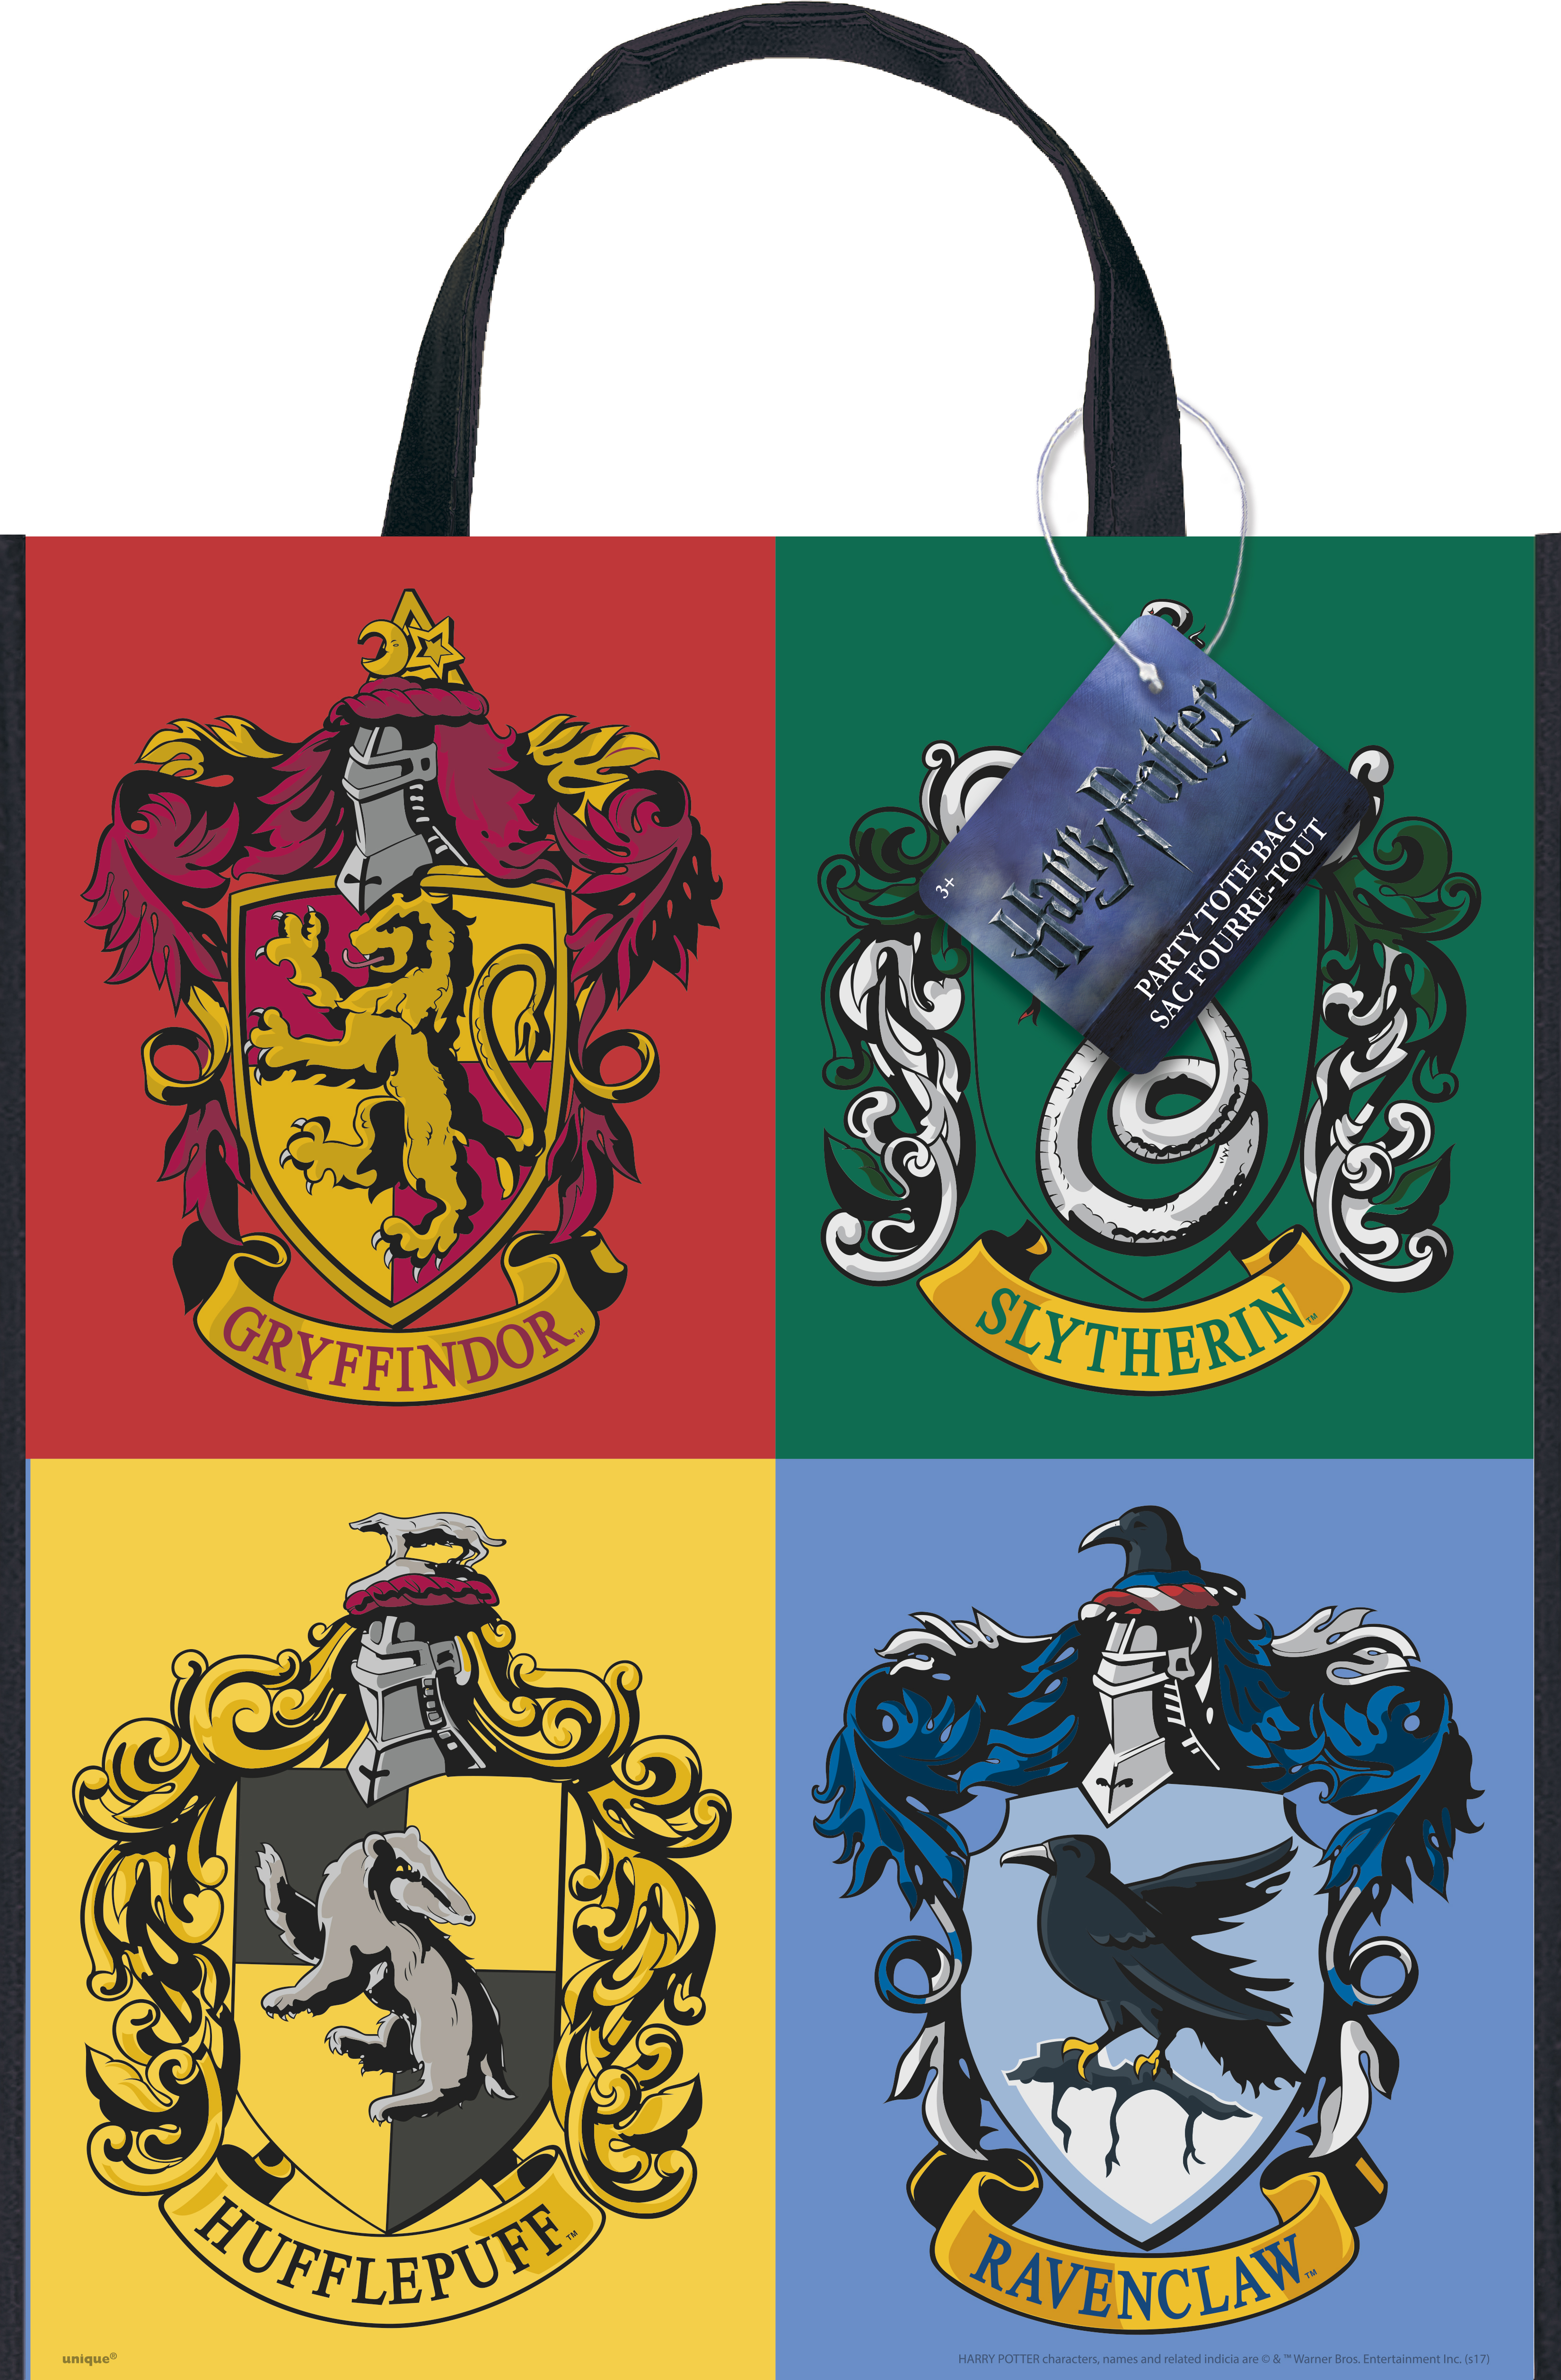 Harry Potter 13" Tote Bag